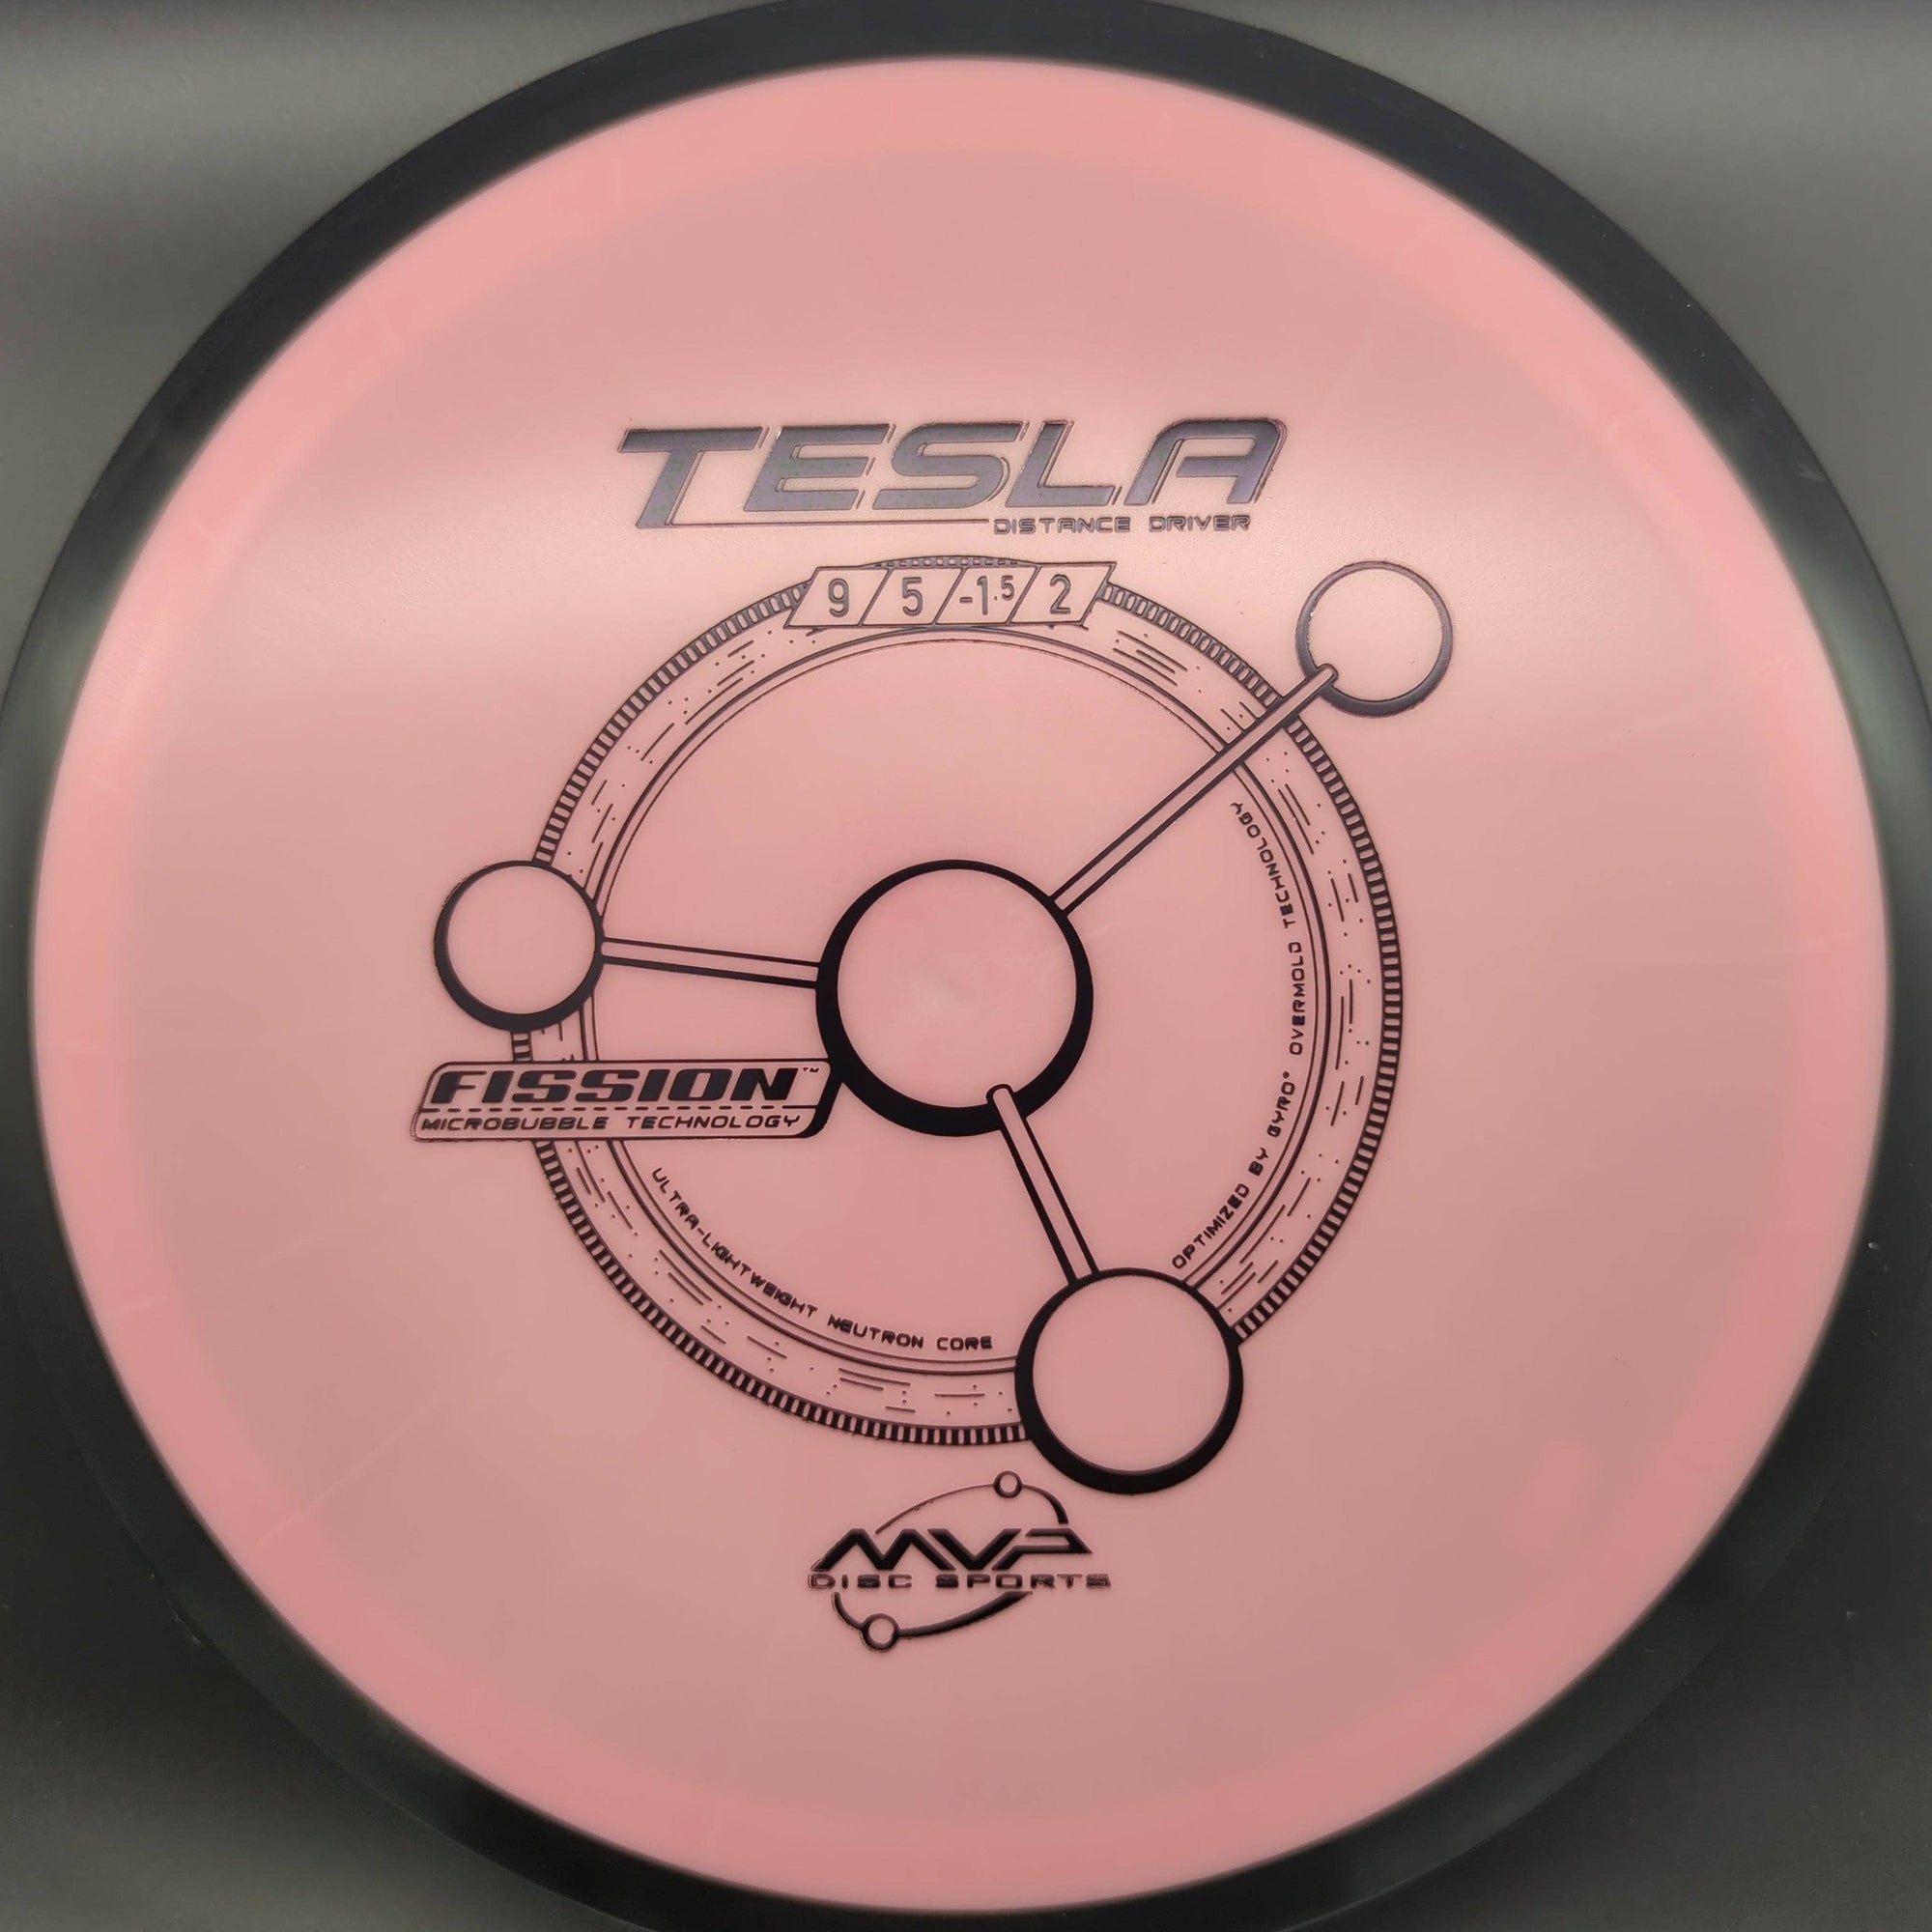 MVP Fairway Driver Tesla, Fission Plastic